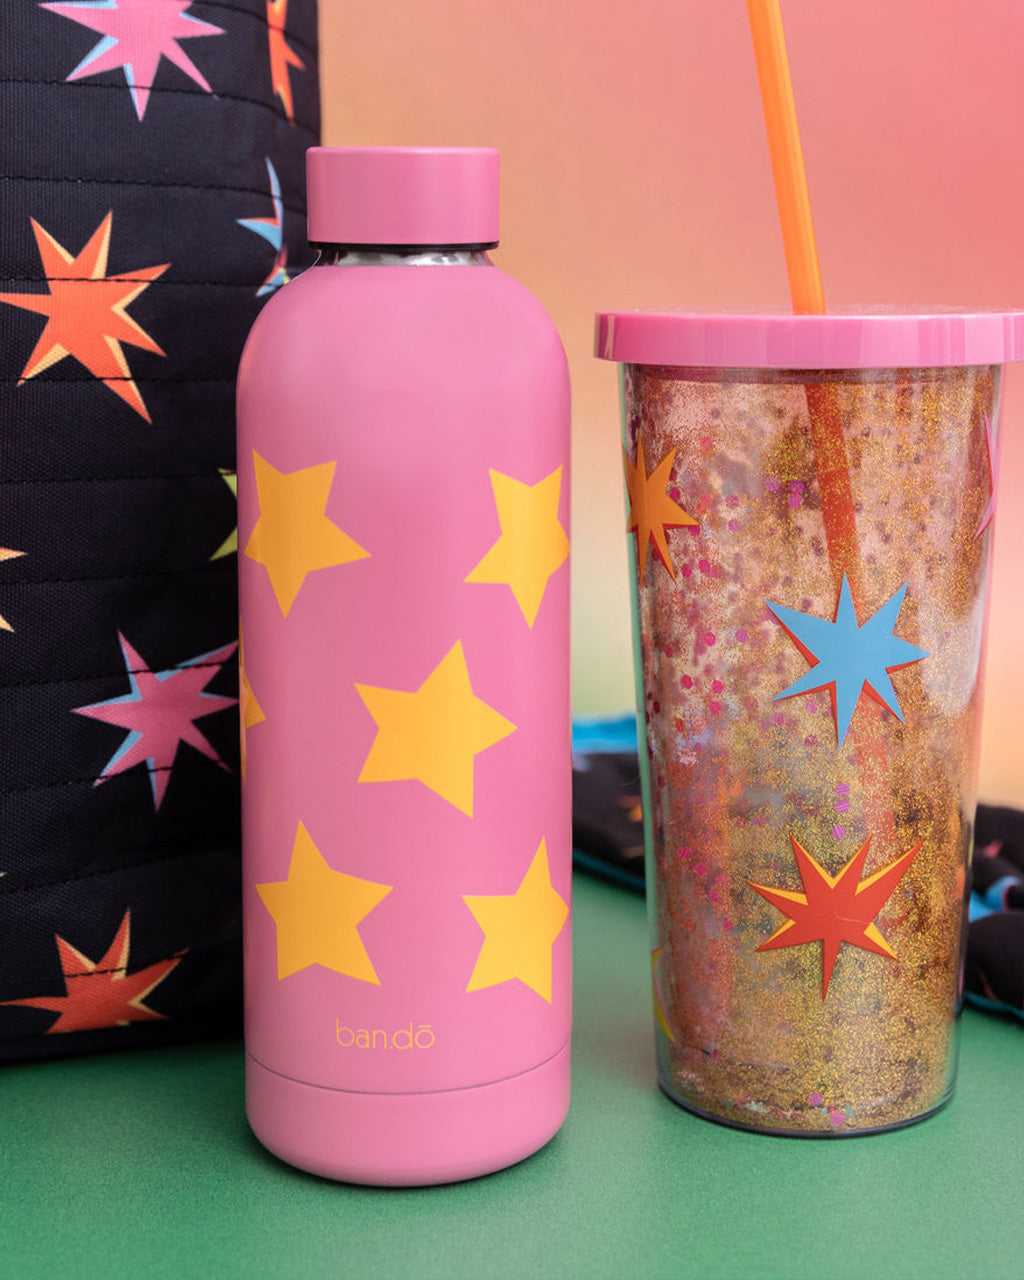 Ban.Do Glitter Bomb Pink Stardust Water Bottle